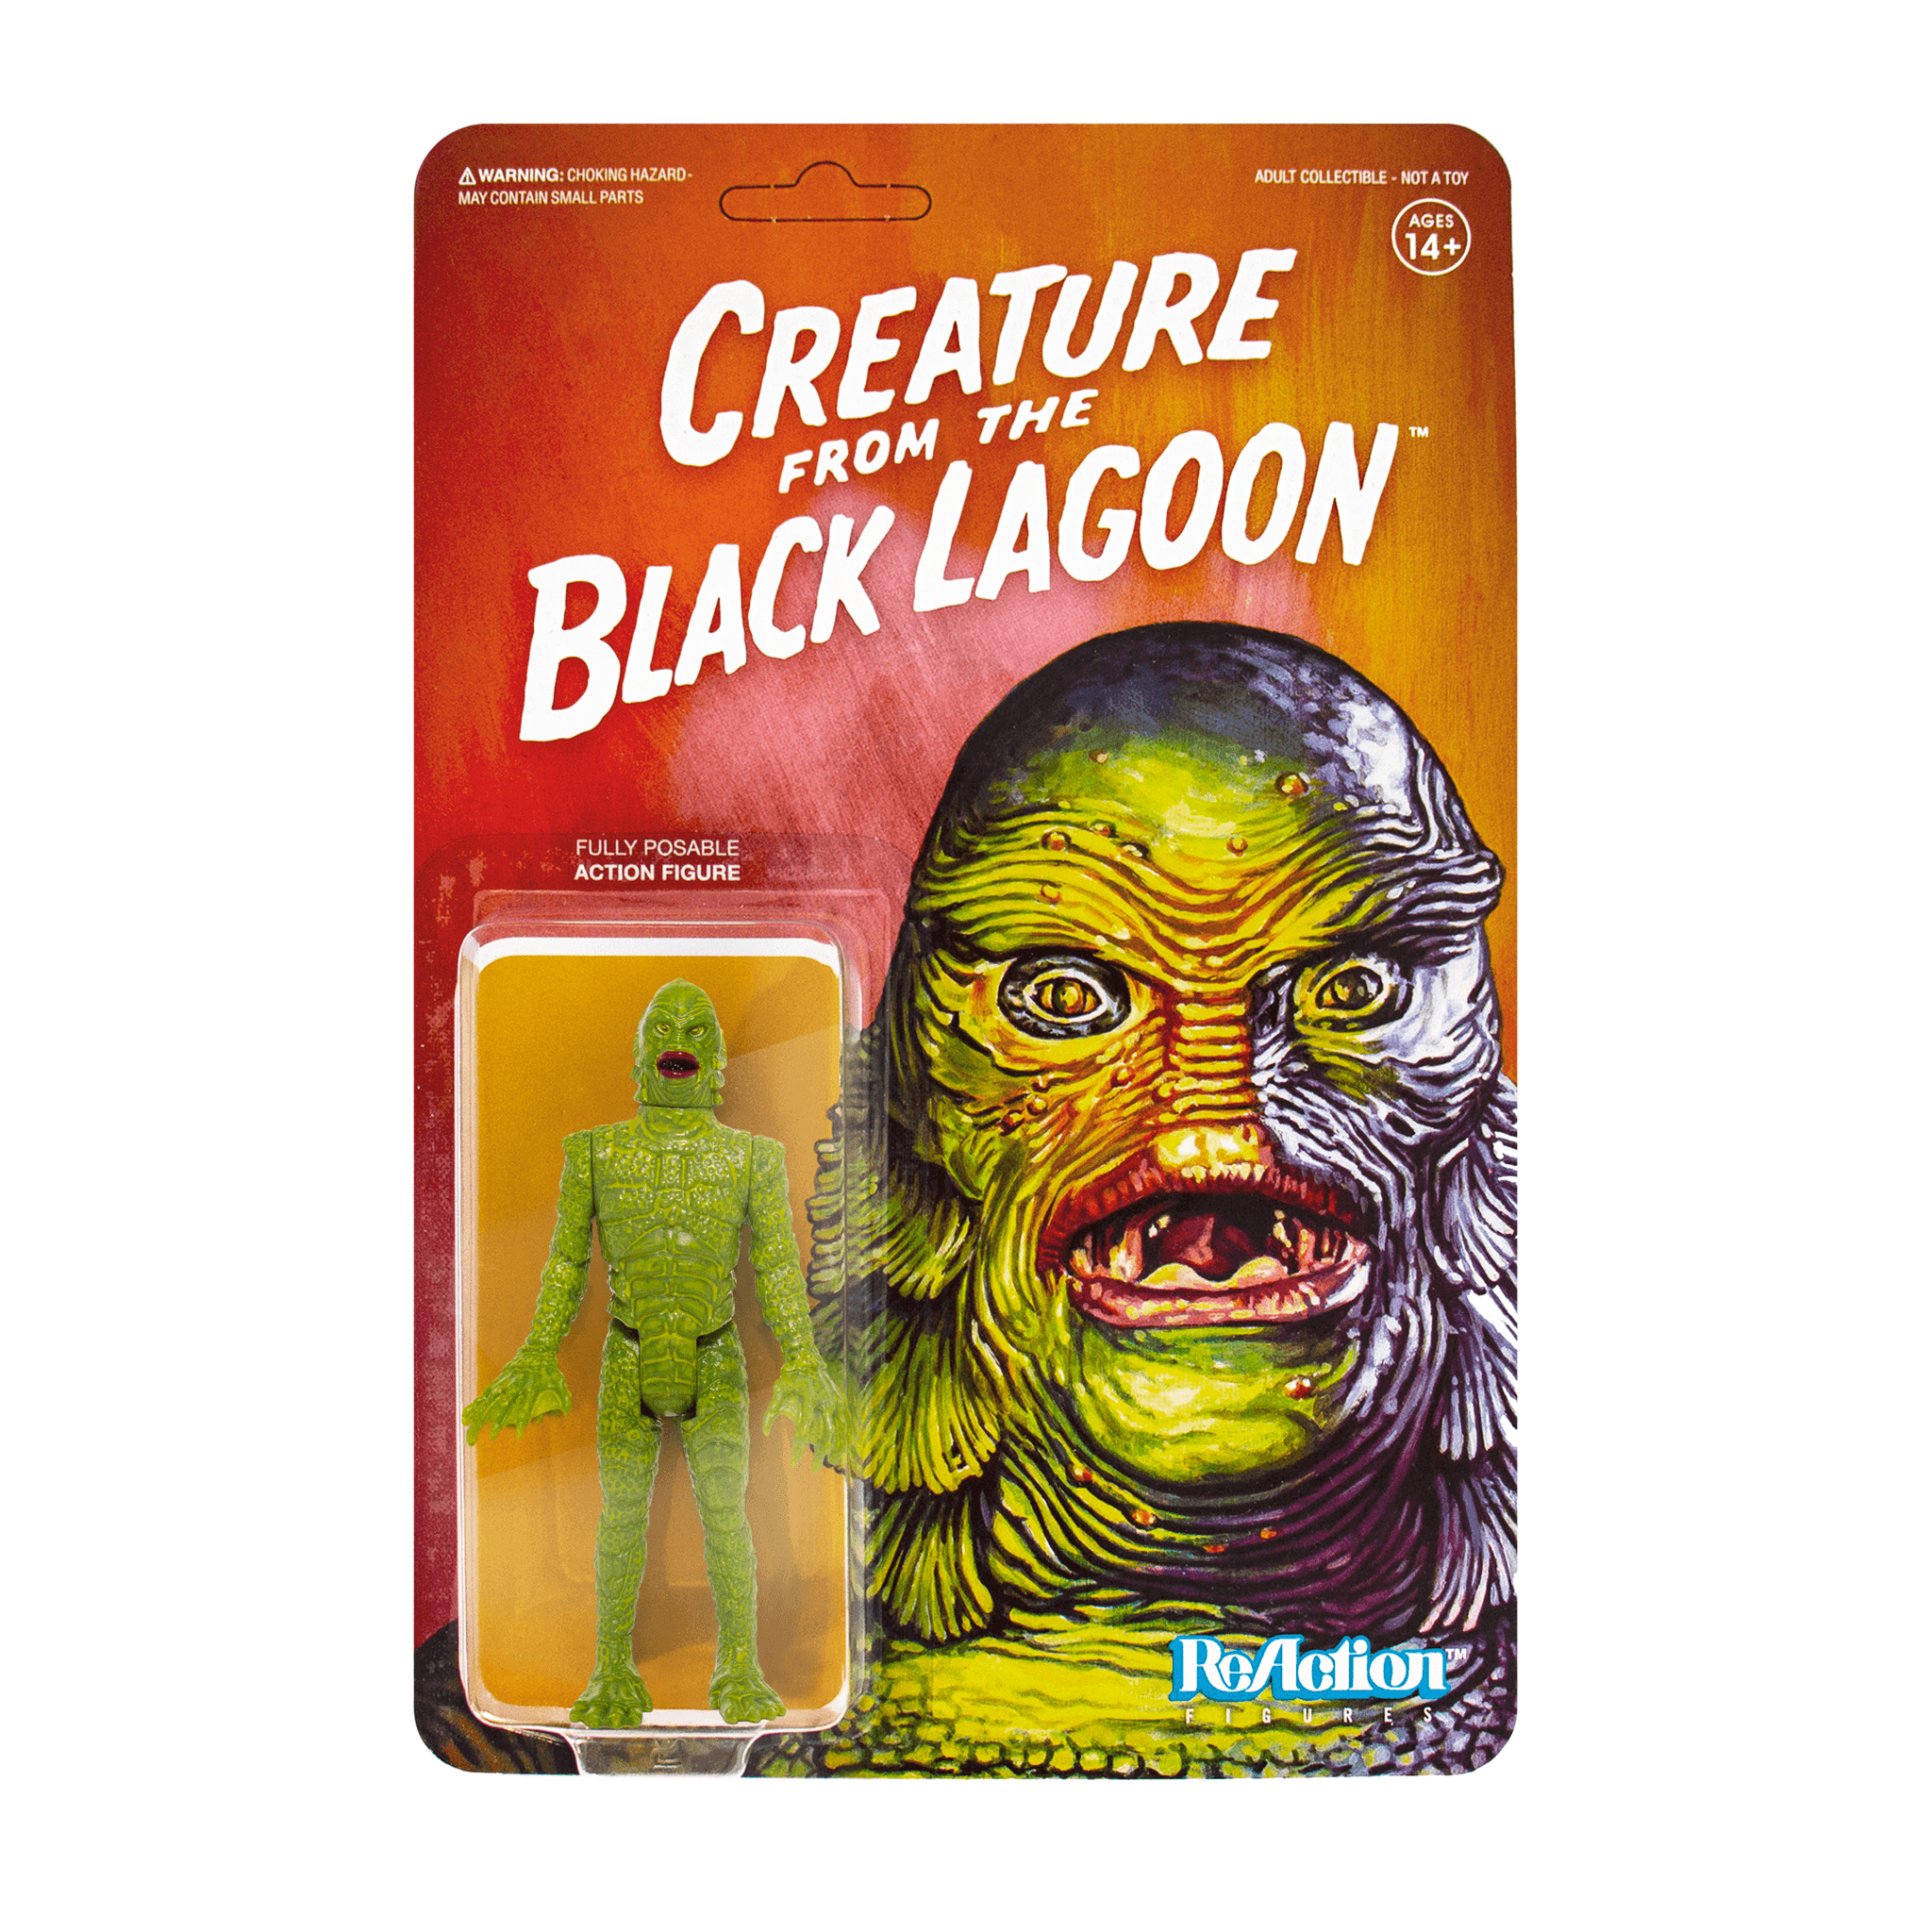 Creature From the Black Lagoon Logo - Universal Monsters ReAction Figure from the Black Lagoon